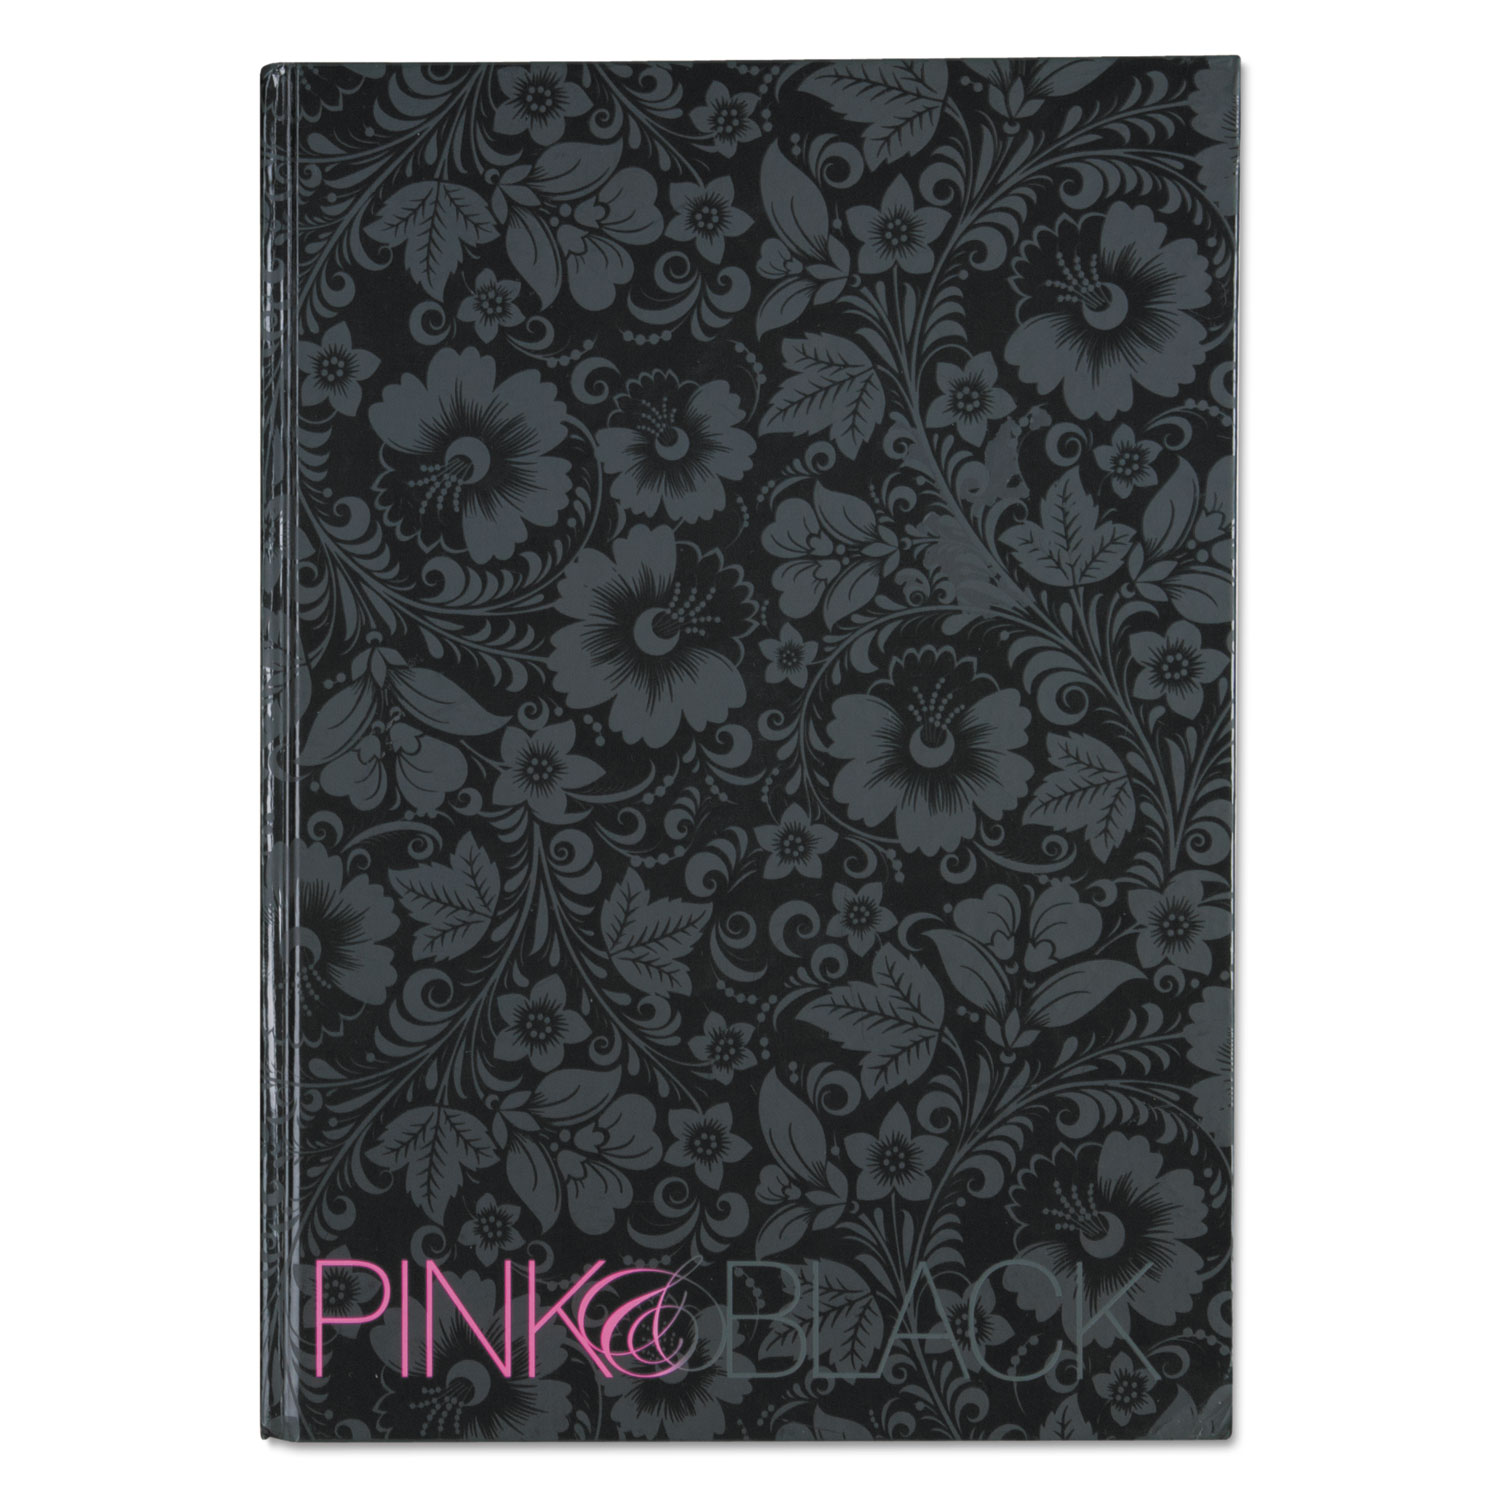  Pink & Black 400015934 Notebook, Medium/College Rule, Black/Pink/Floral Cover, 11.68 x 8.25, 96 Sheets (JDK400015934) 